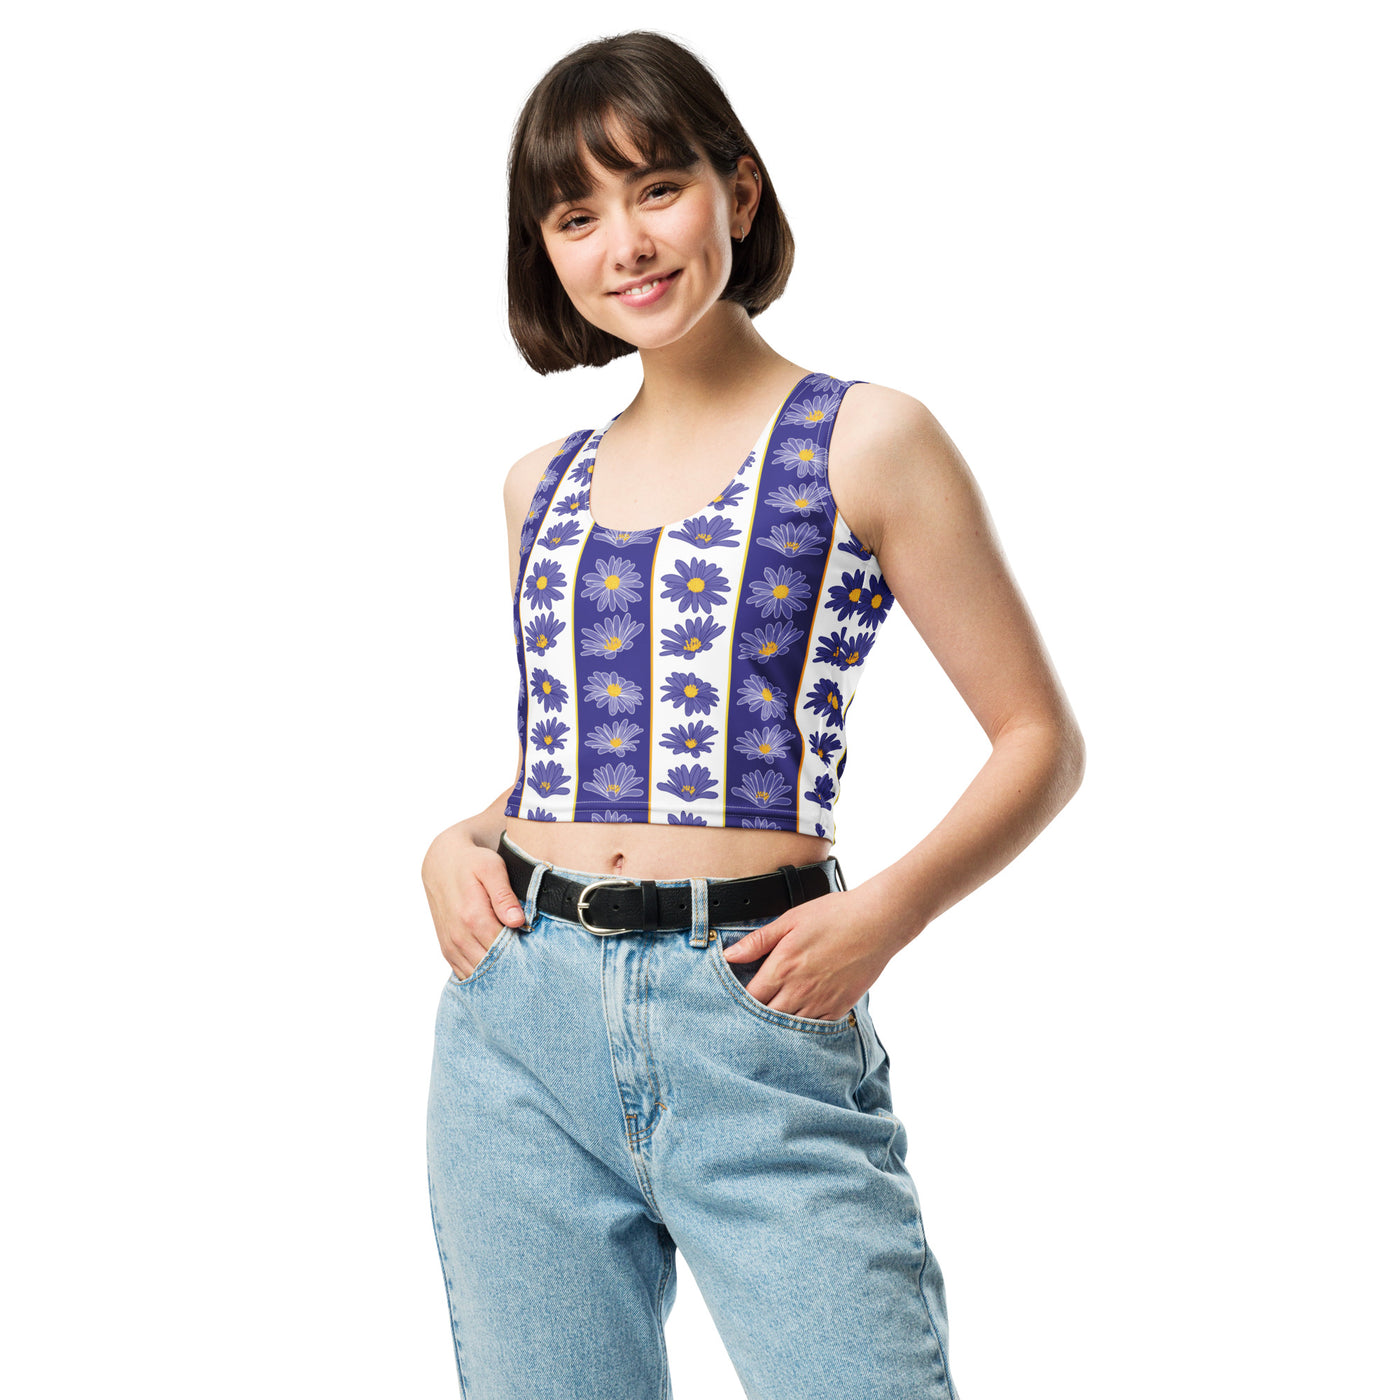 Jessie's Joy Stripes Crop Top: Stylish & Comfortable